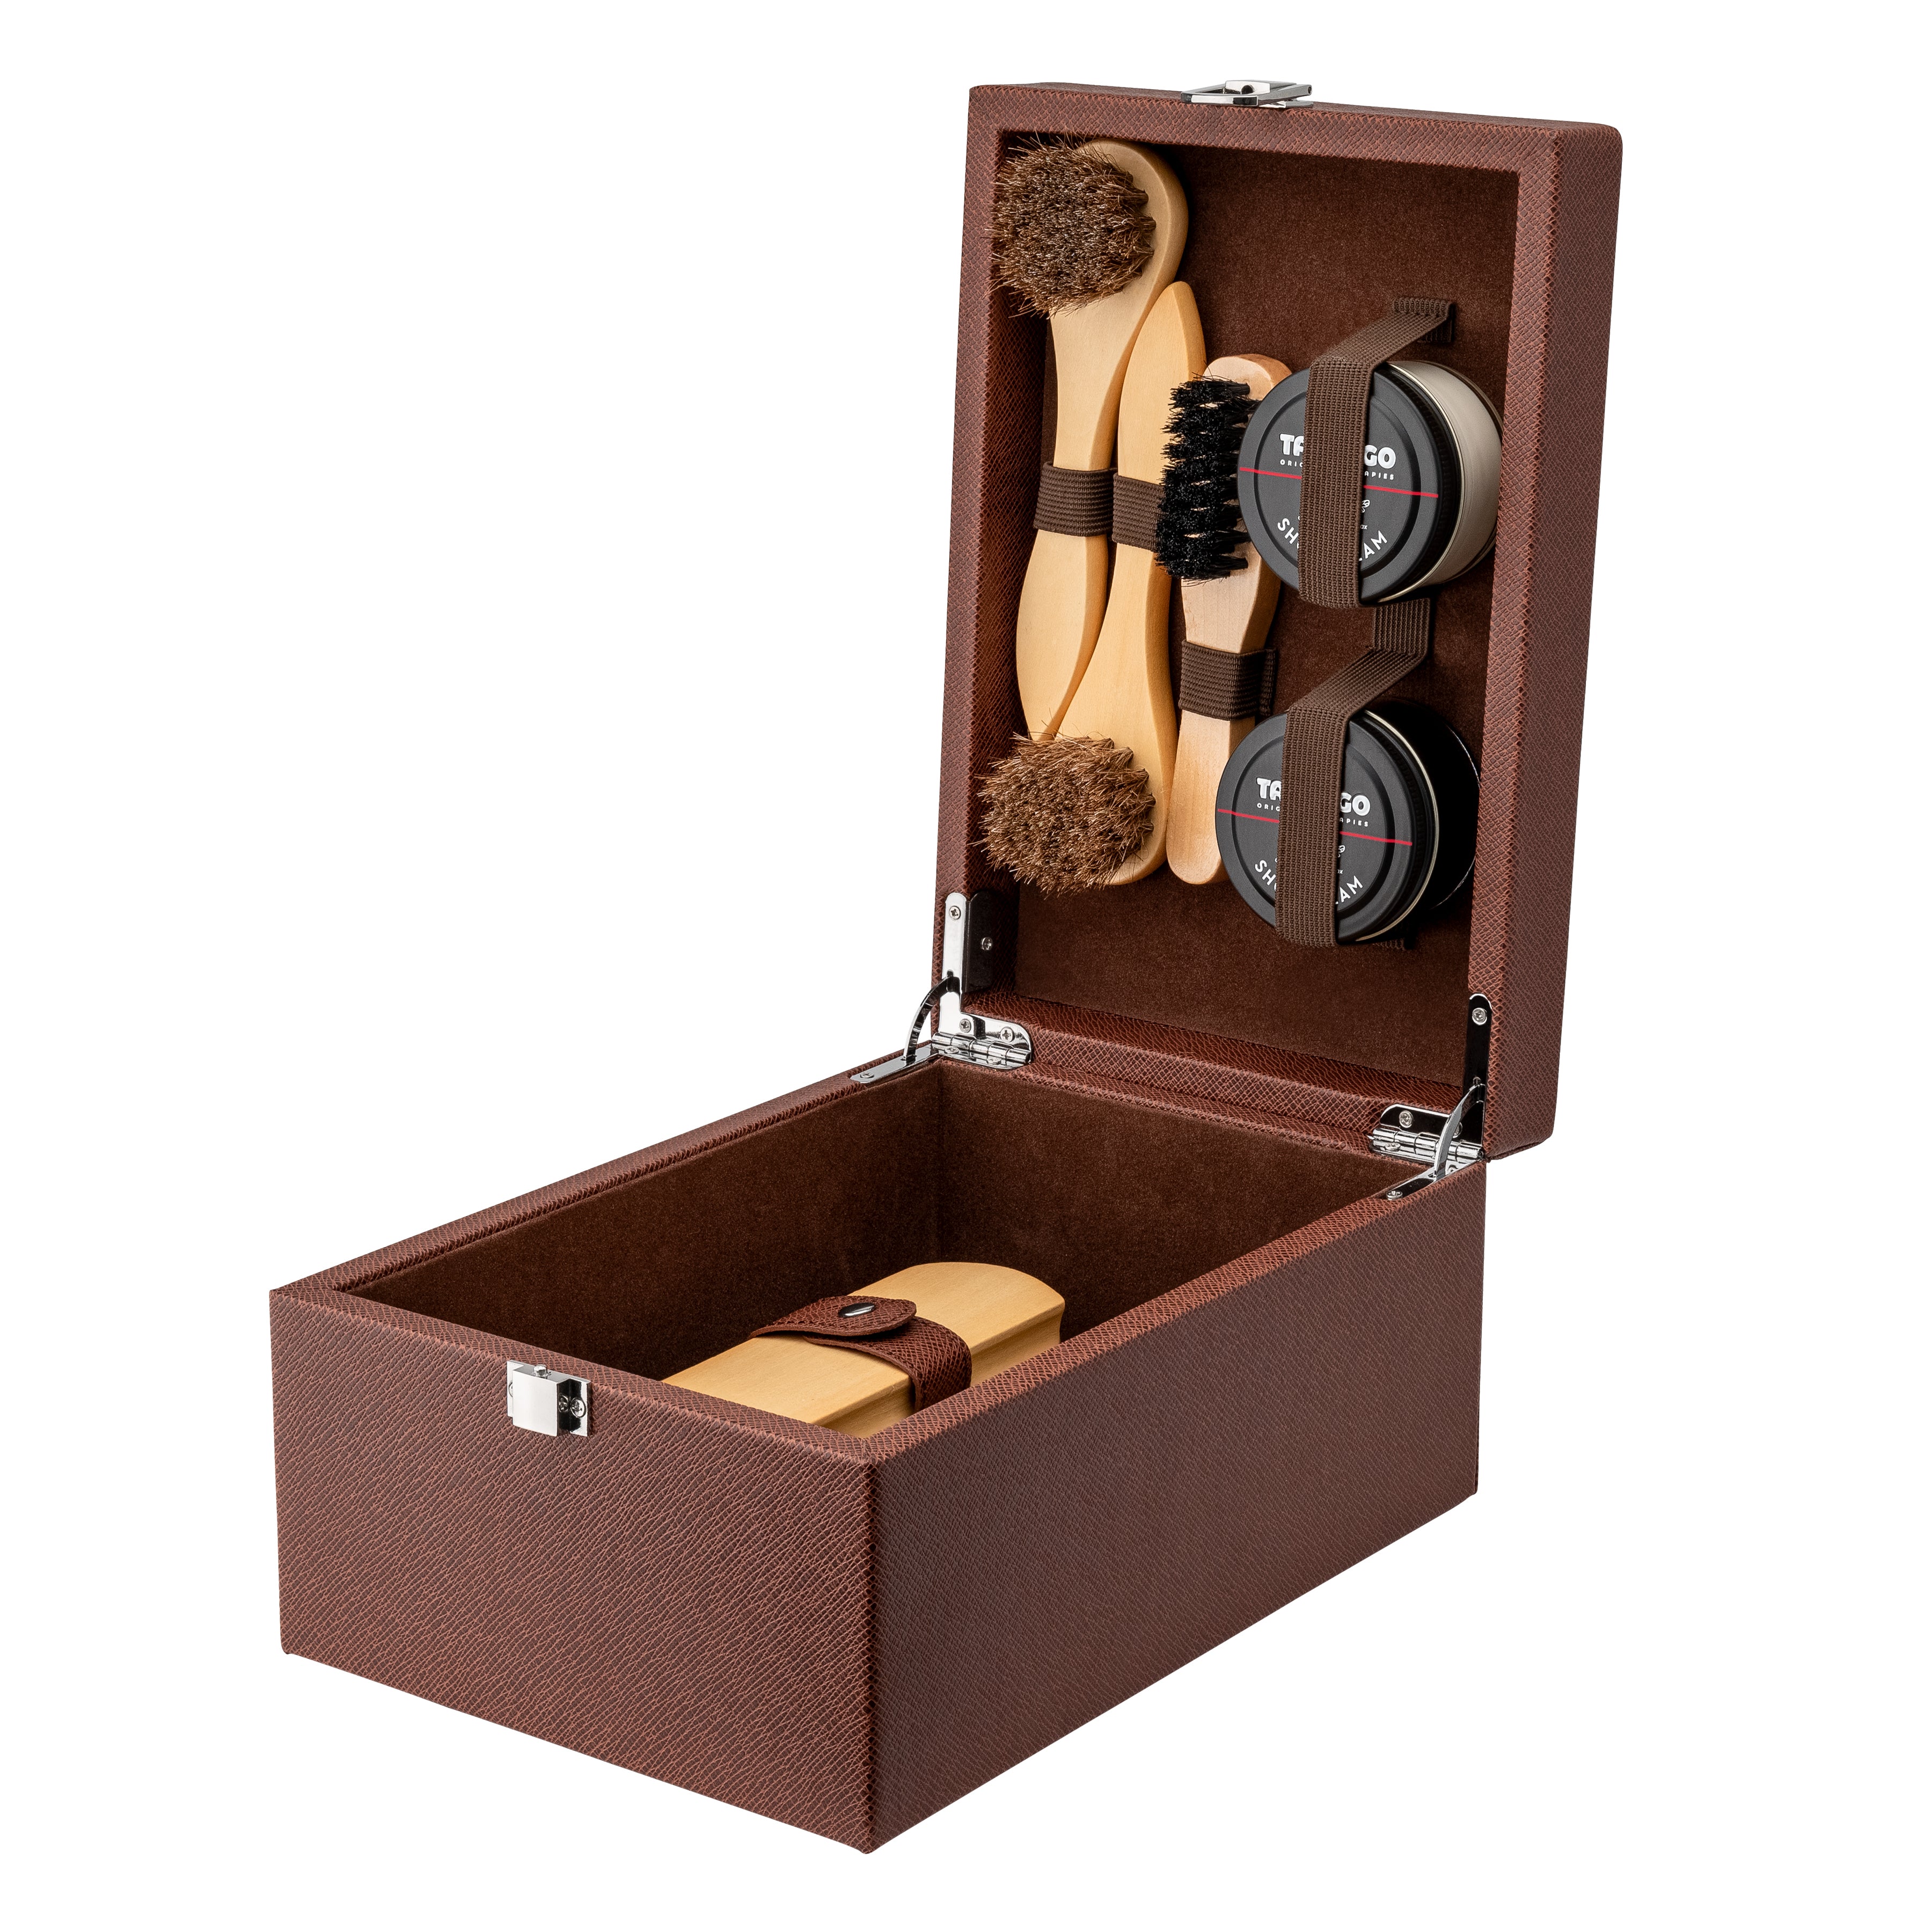 Tarrago Shoe Care Luxury Kit Wooden Brown case